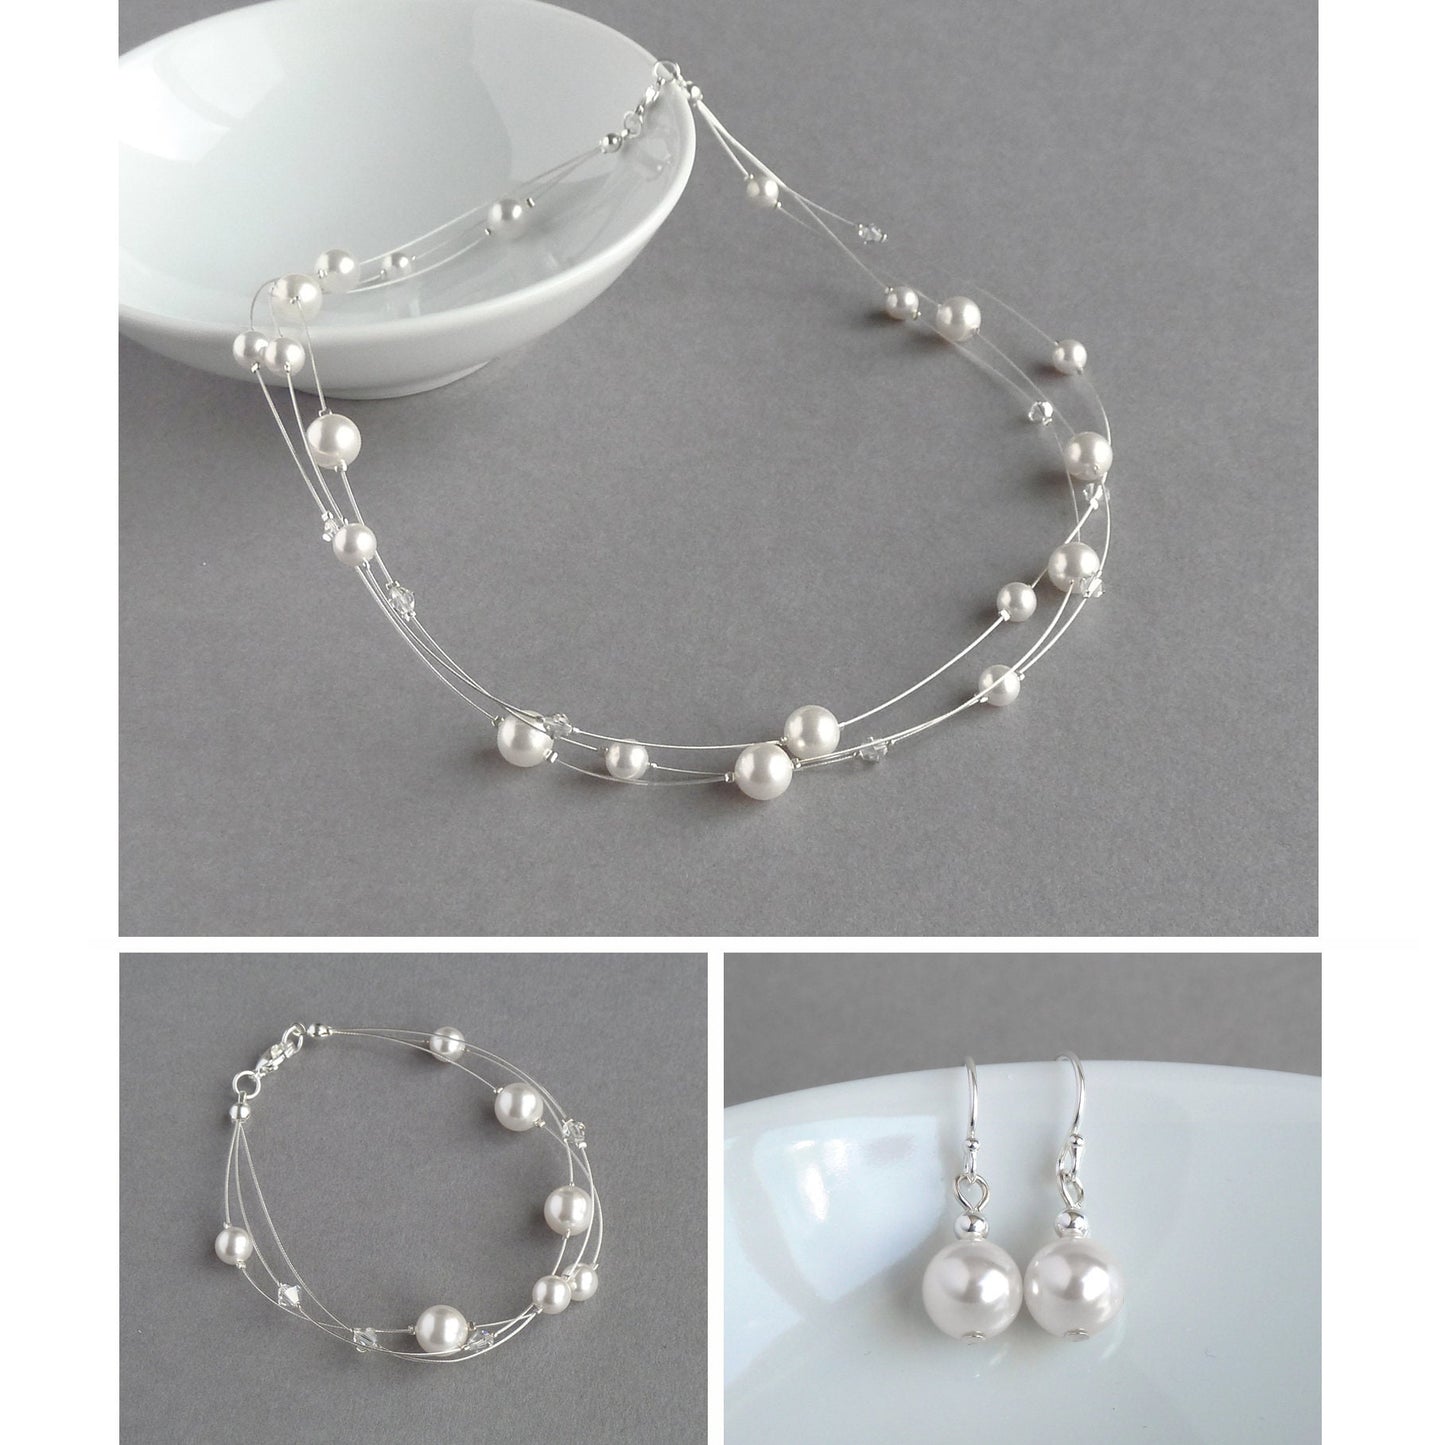 Simple White Pearl Drop Earrings - White, Glass Pearl Earrings for Weddings